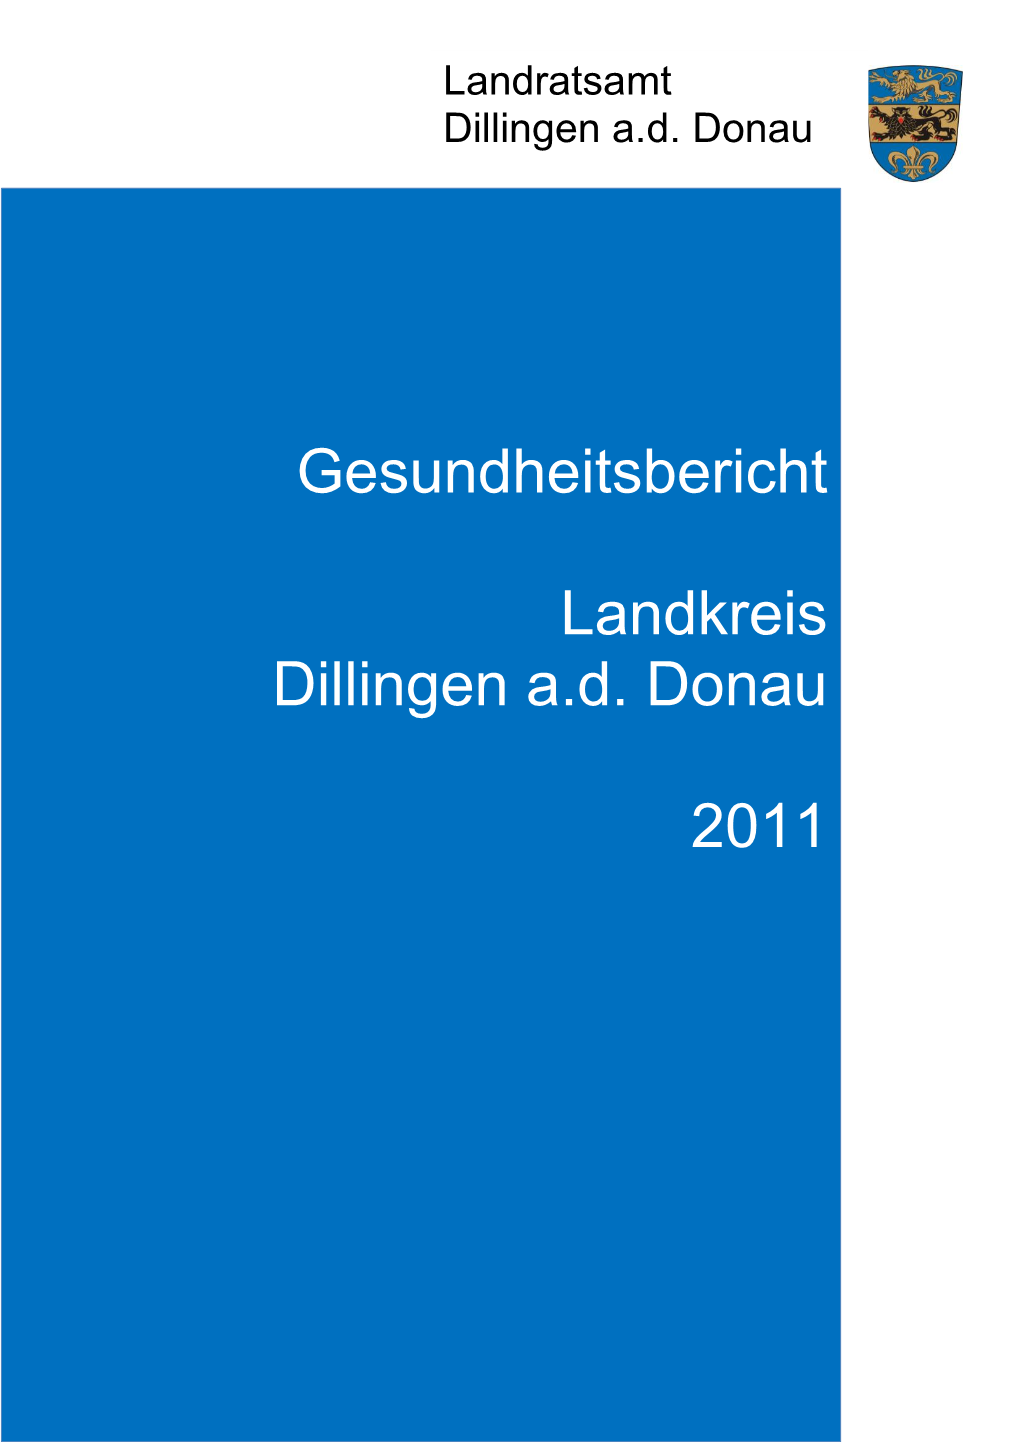 Gesundheitsbericht Landkreis Dillingen A.D. Donau 2011